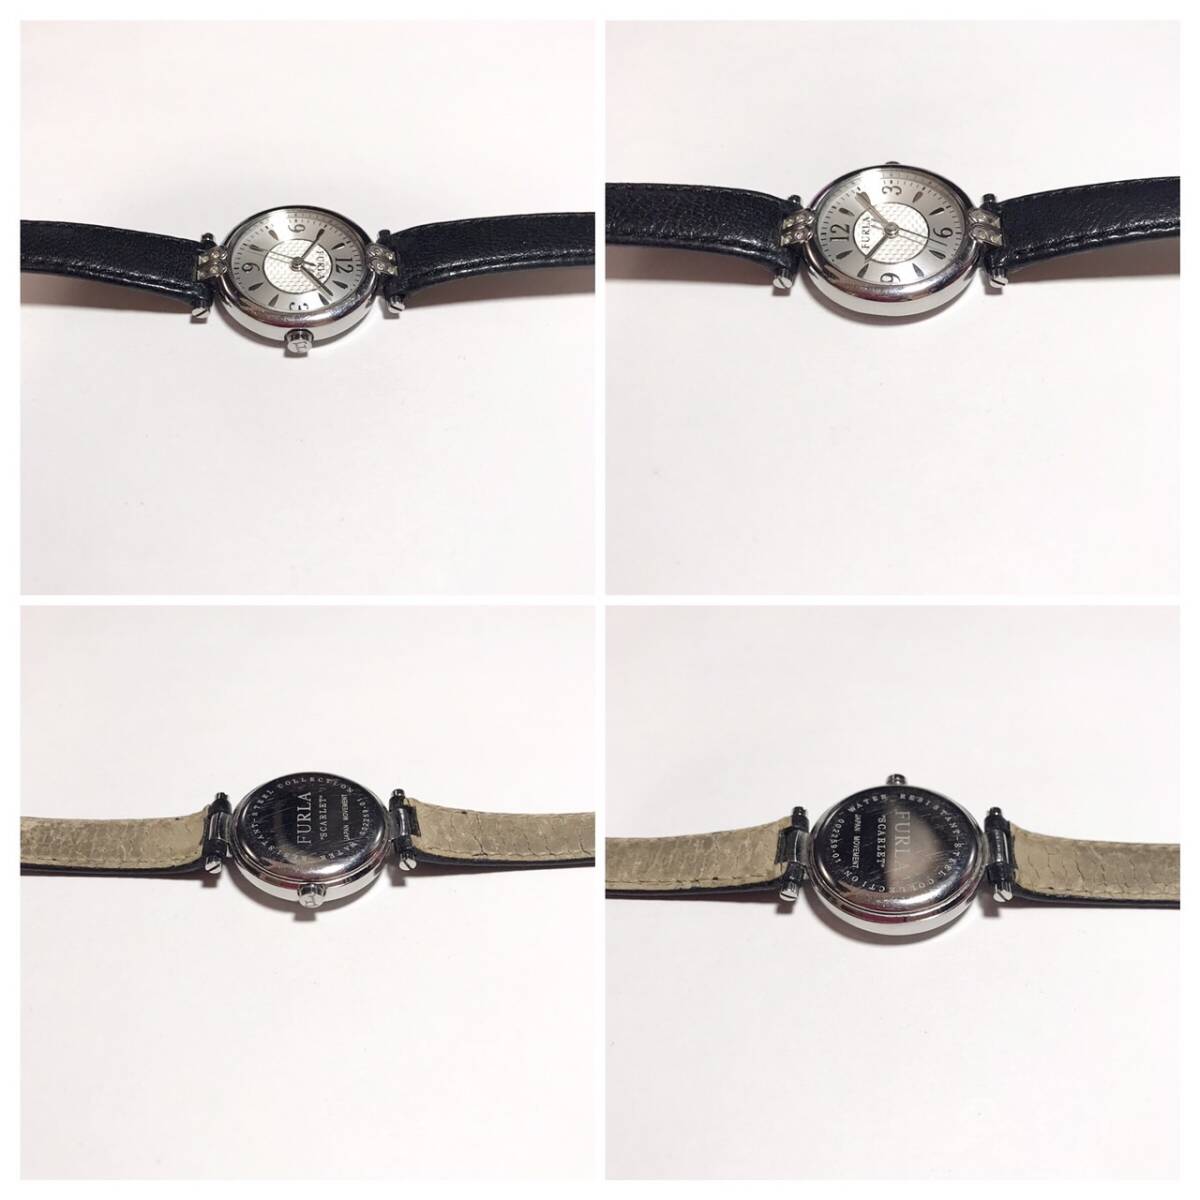 [1 jpy ] clock FURLA Furla SCARLET scarlet 002259-01 QUARTZ quartz 3 hands GENUINE LEATHER original leather watch wristwatch junk treatment 